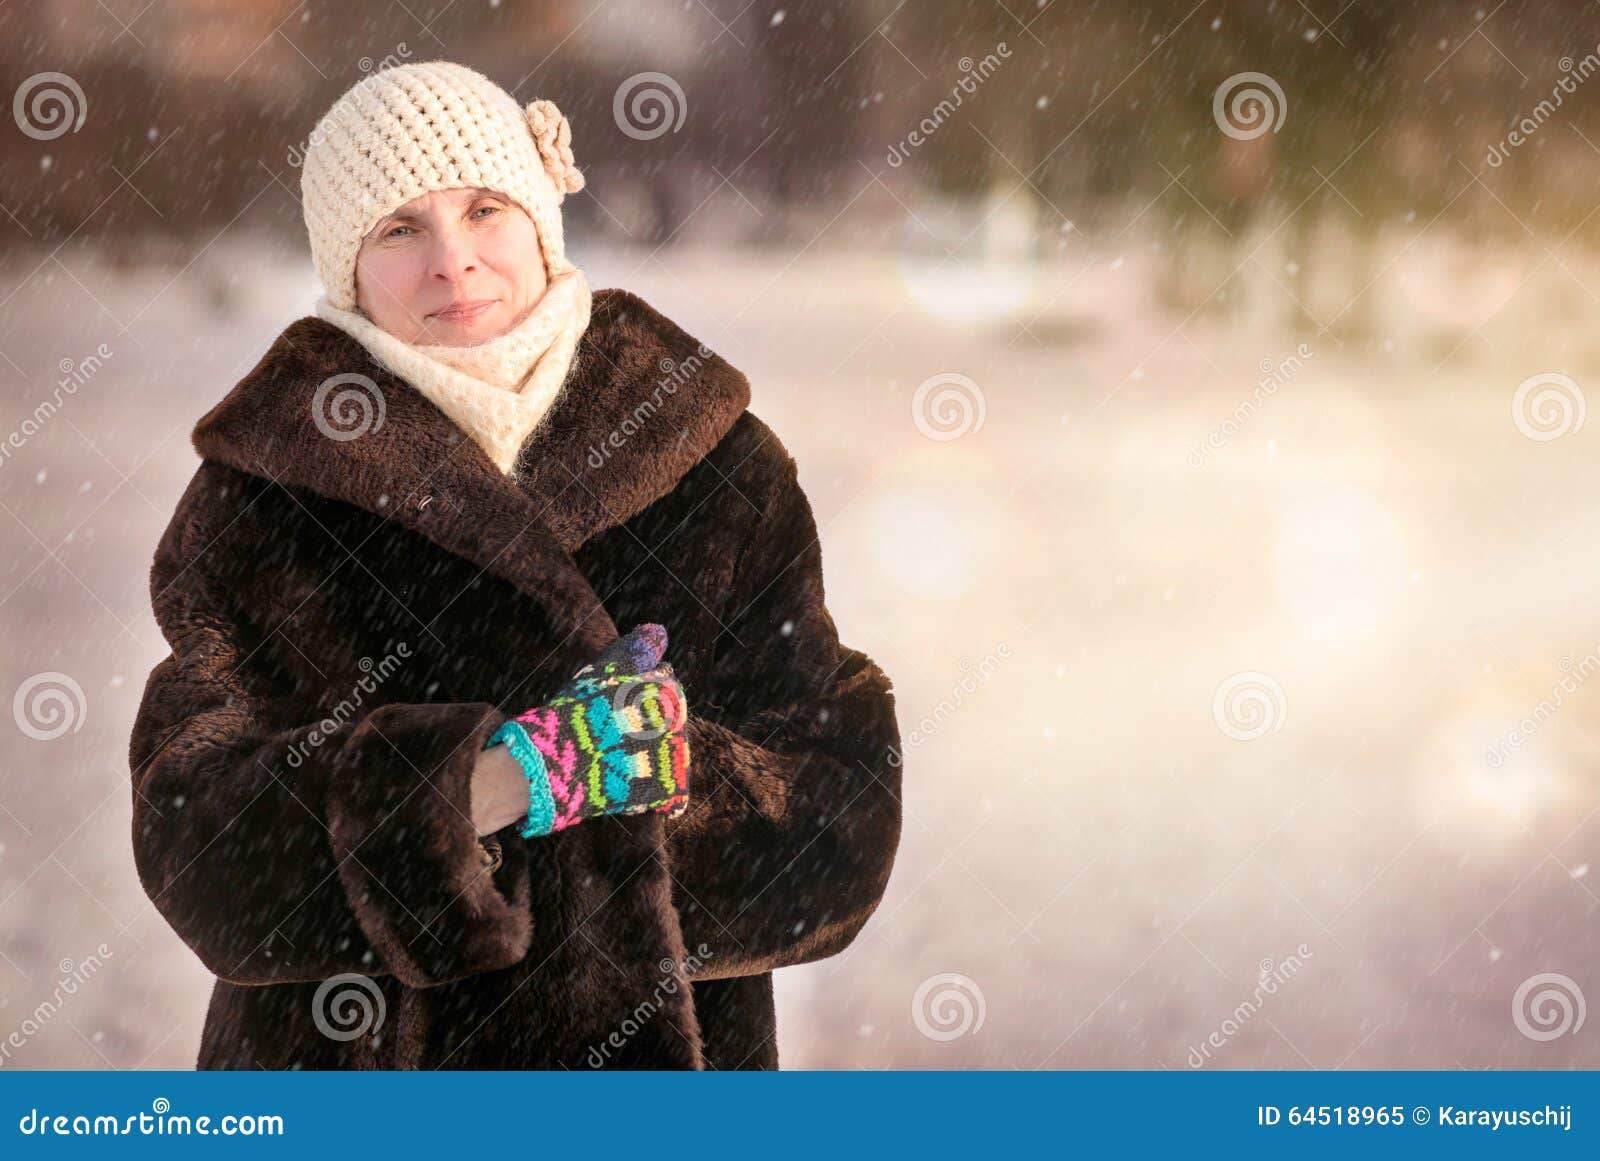 cc0可商用高清的雪,雪,女人,冬天的图片-千叶网